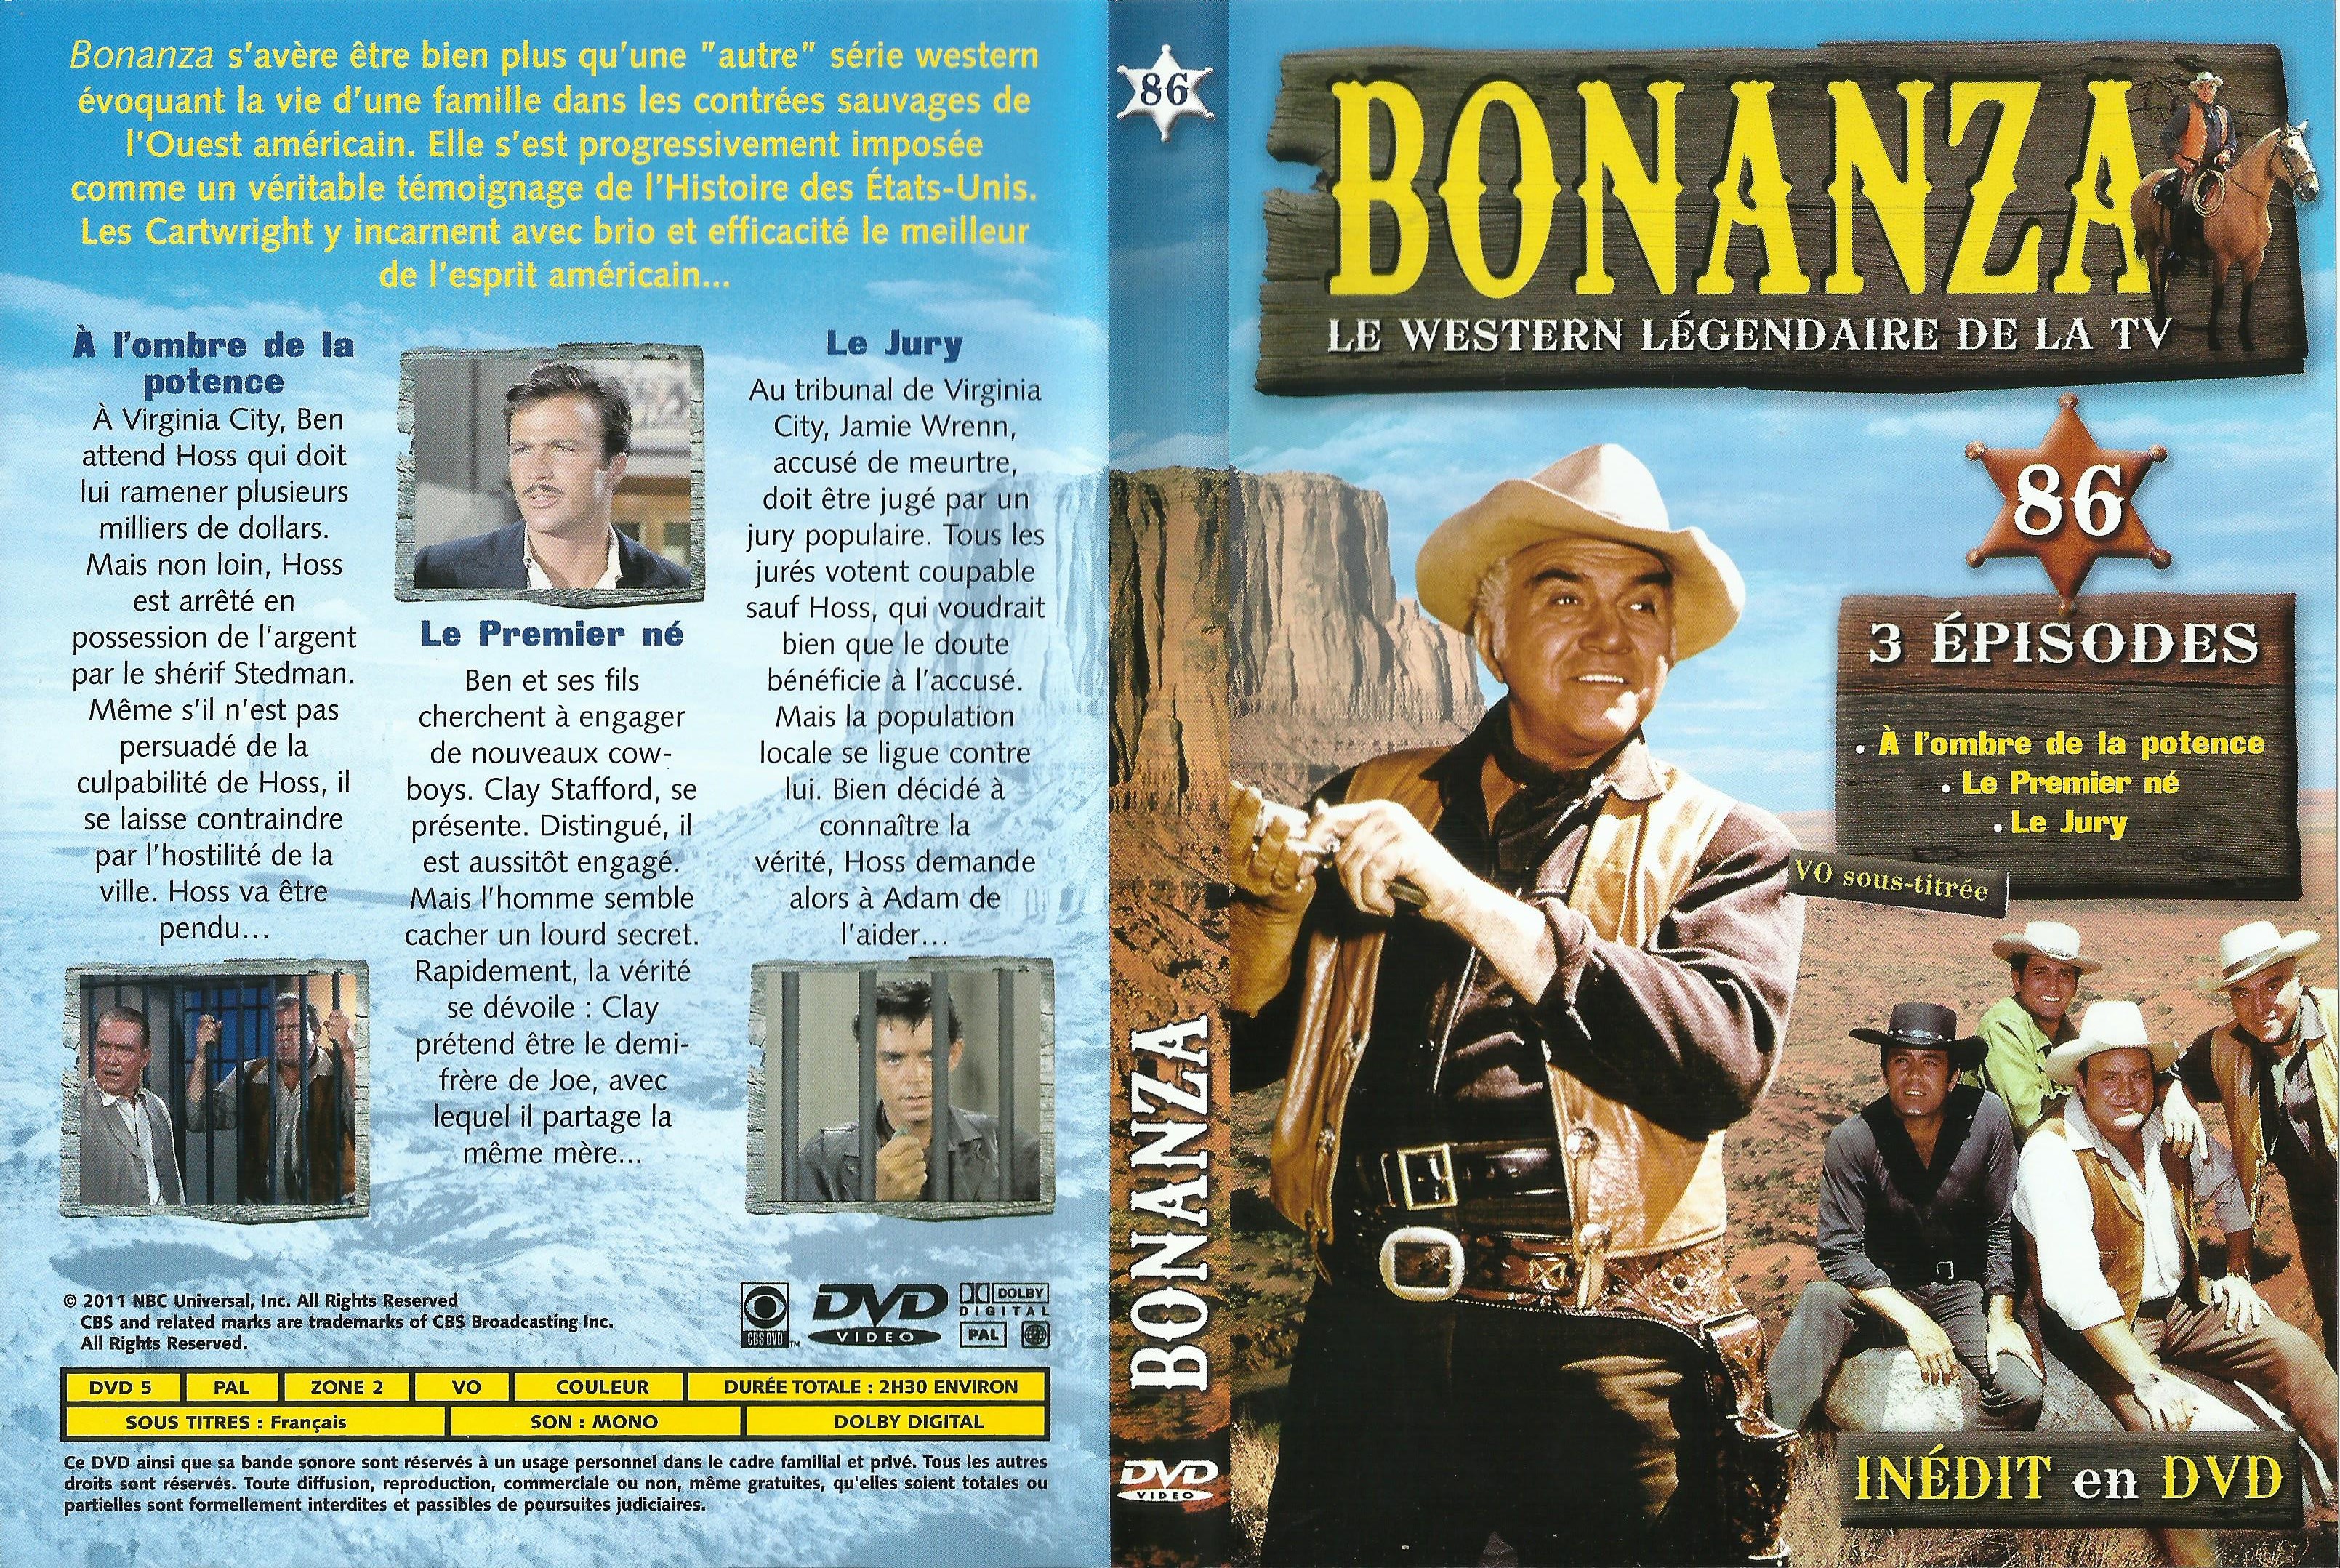 Jaquette DVD Bonanza vol 86